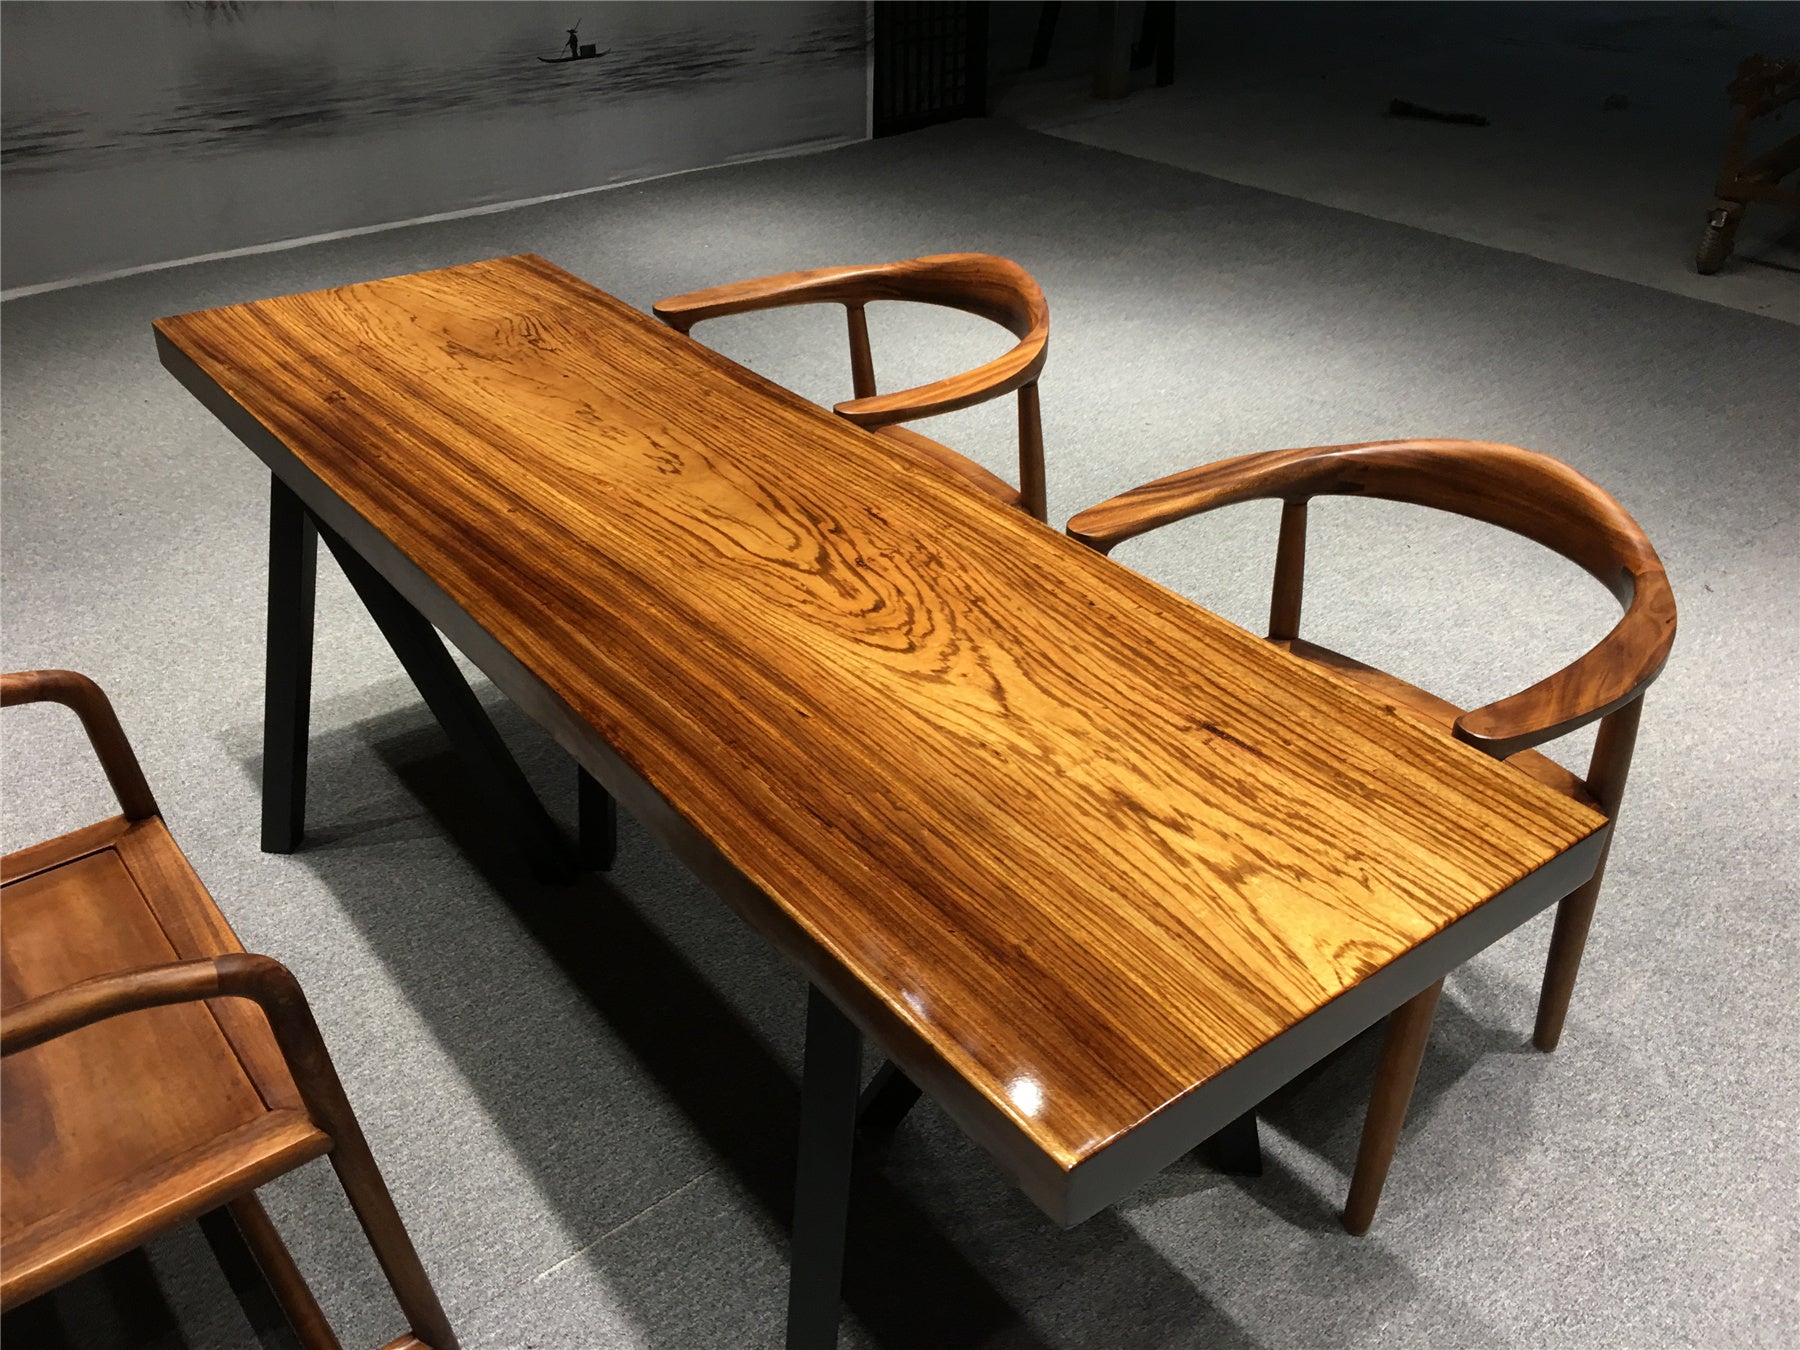 Zingana wood table, Zingana wood dining table, wood slab table top